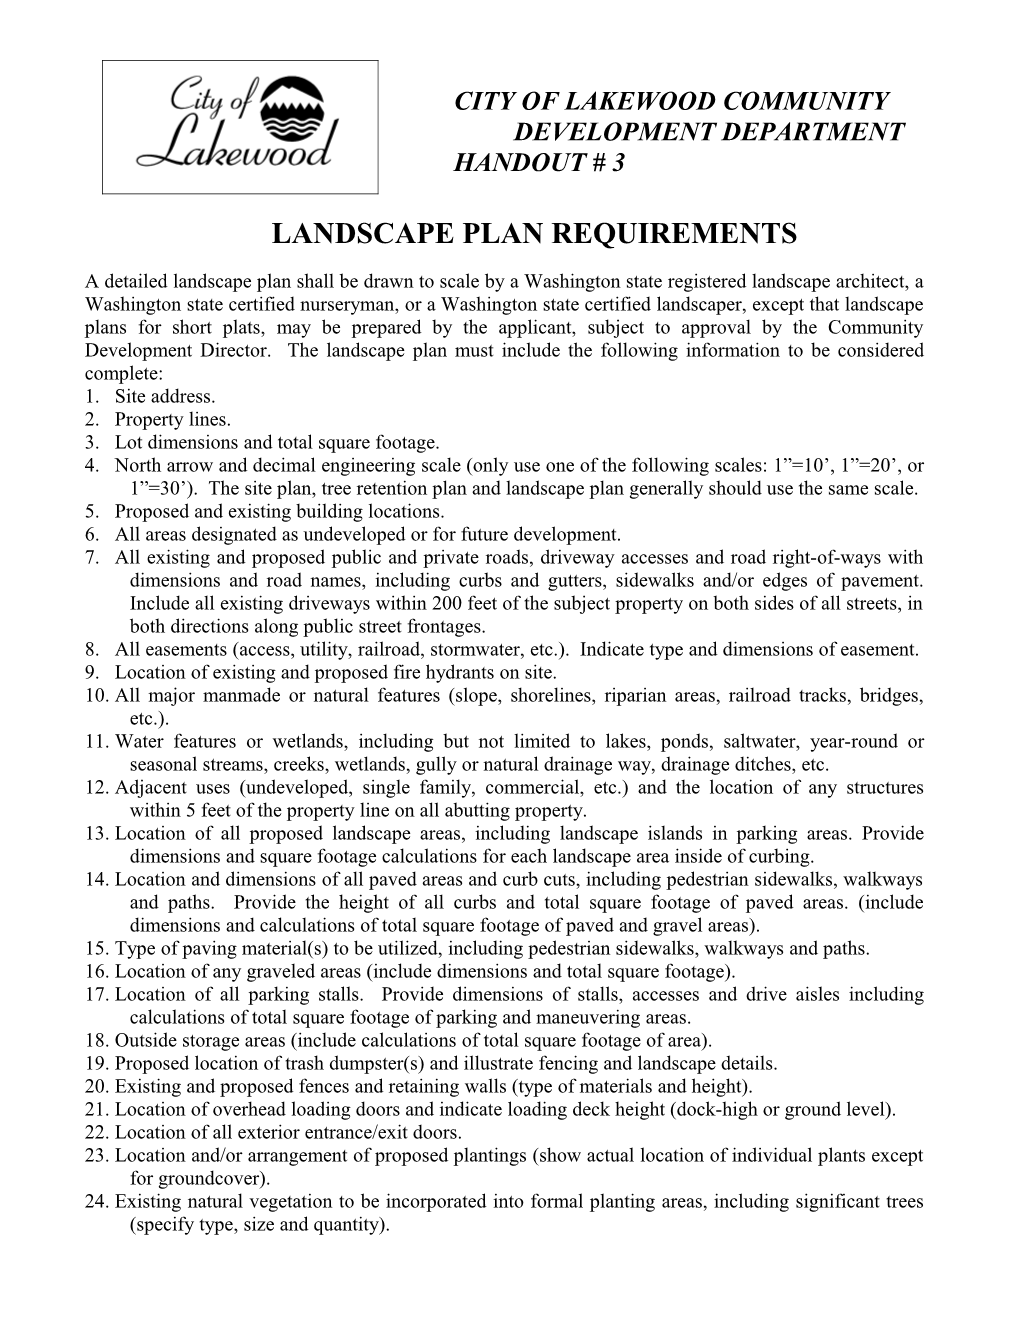 City of Lakewood Community Development Department Handout # 2